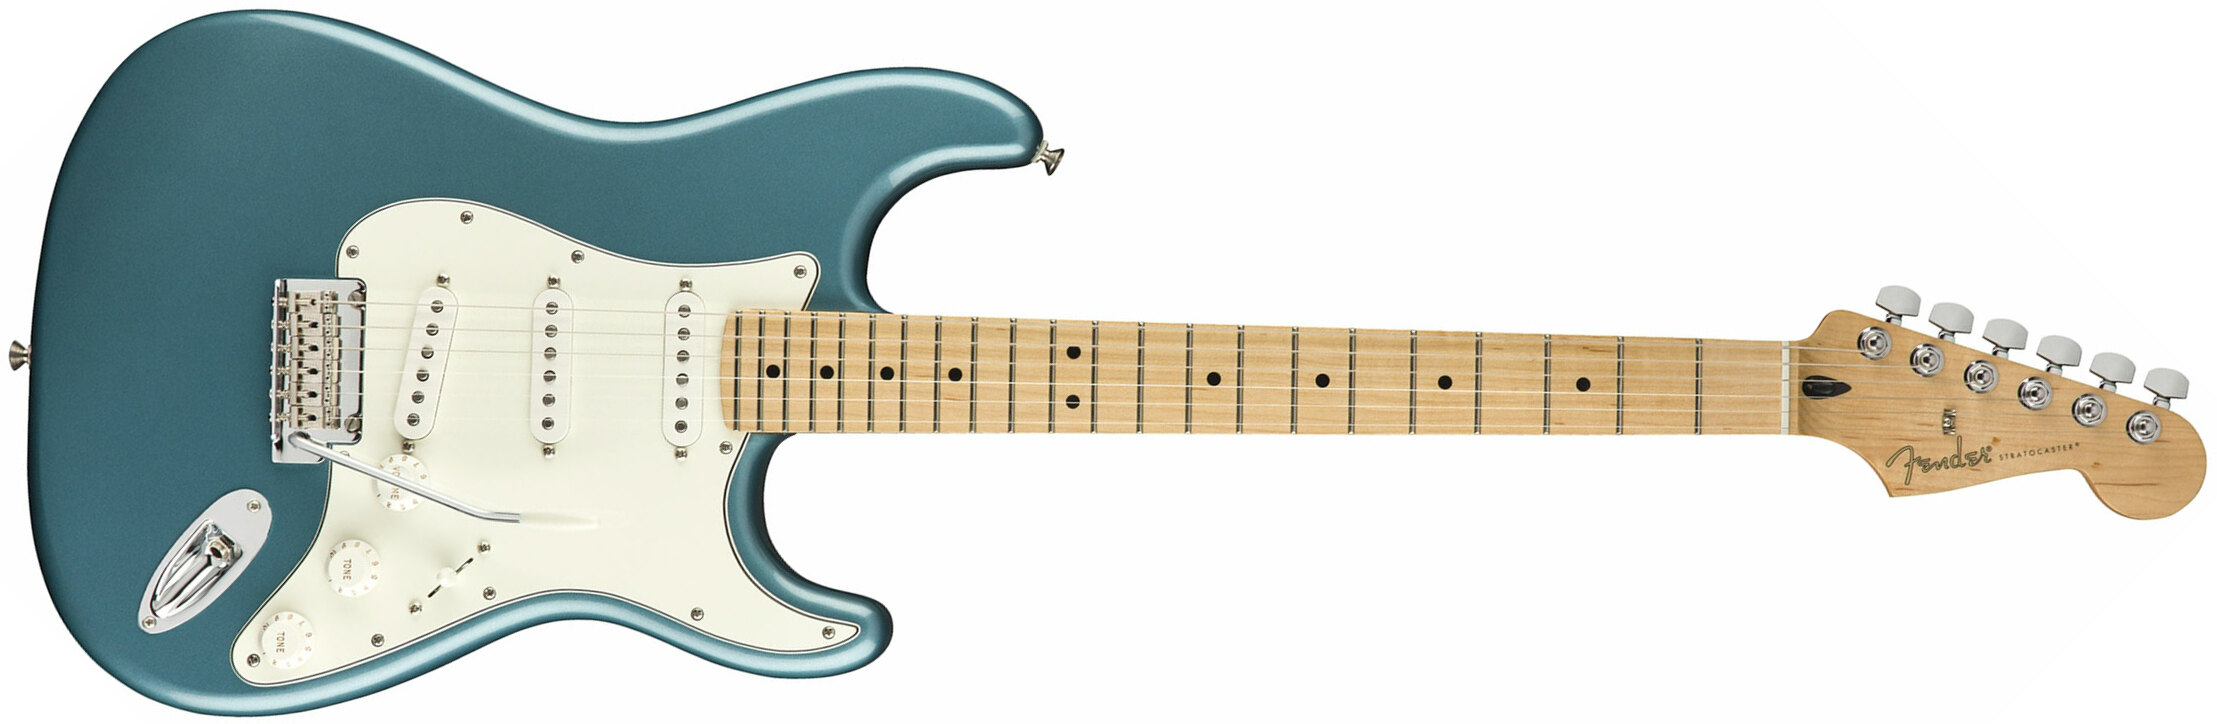 Fender Strat Player Mex Sss Mn - Tidepool - Guitare Électrique Forme Str - Main picture